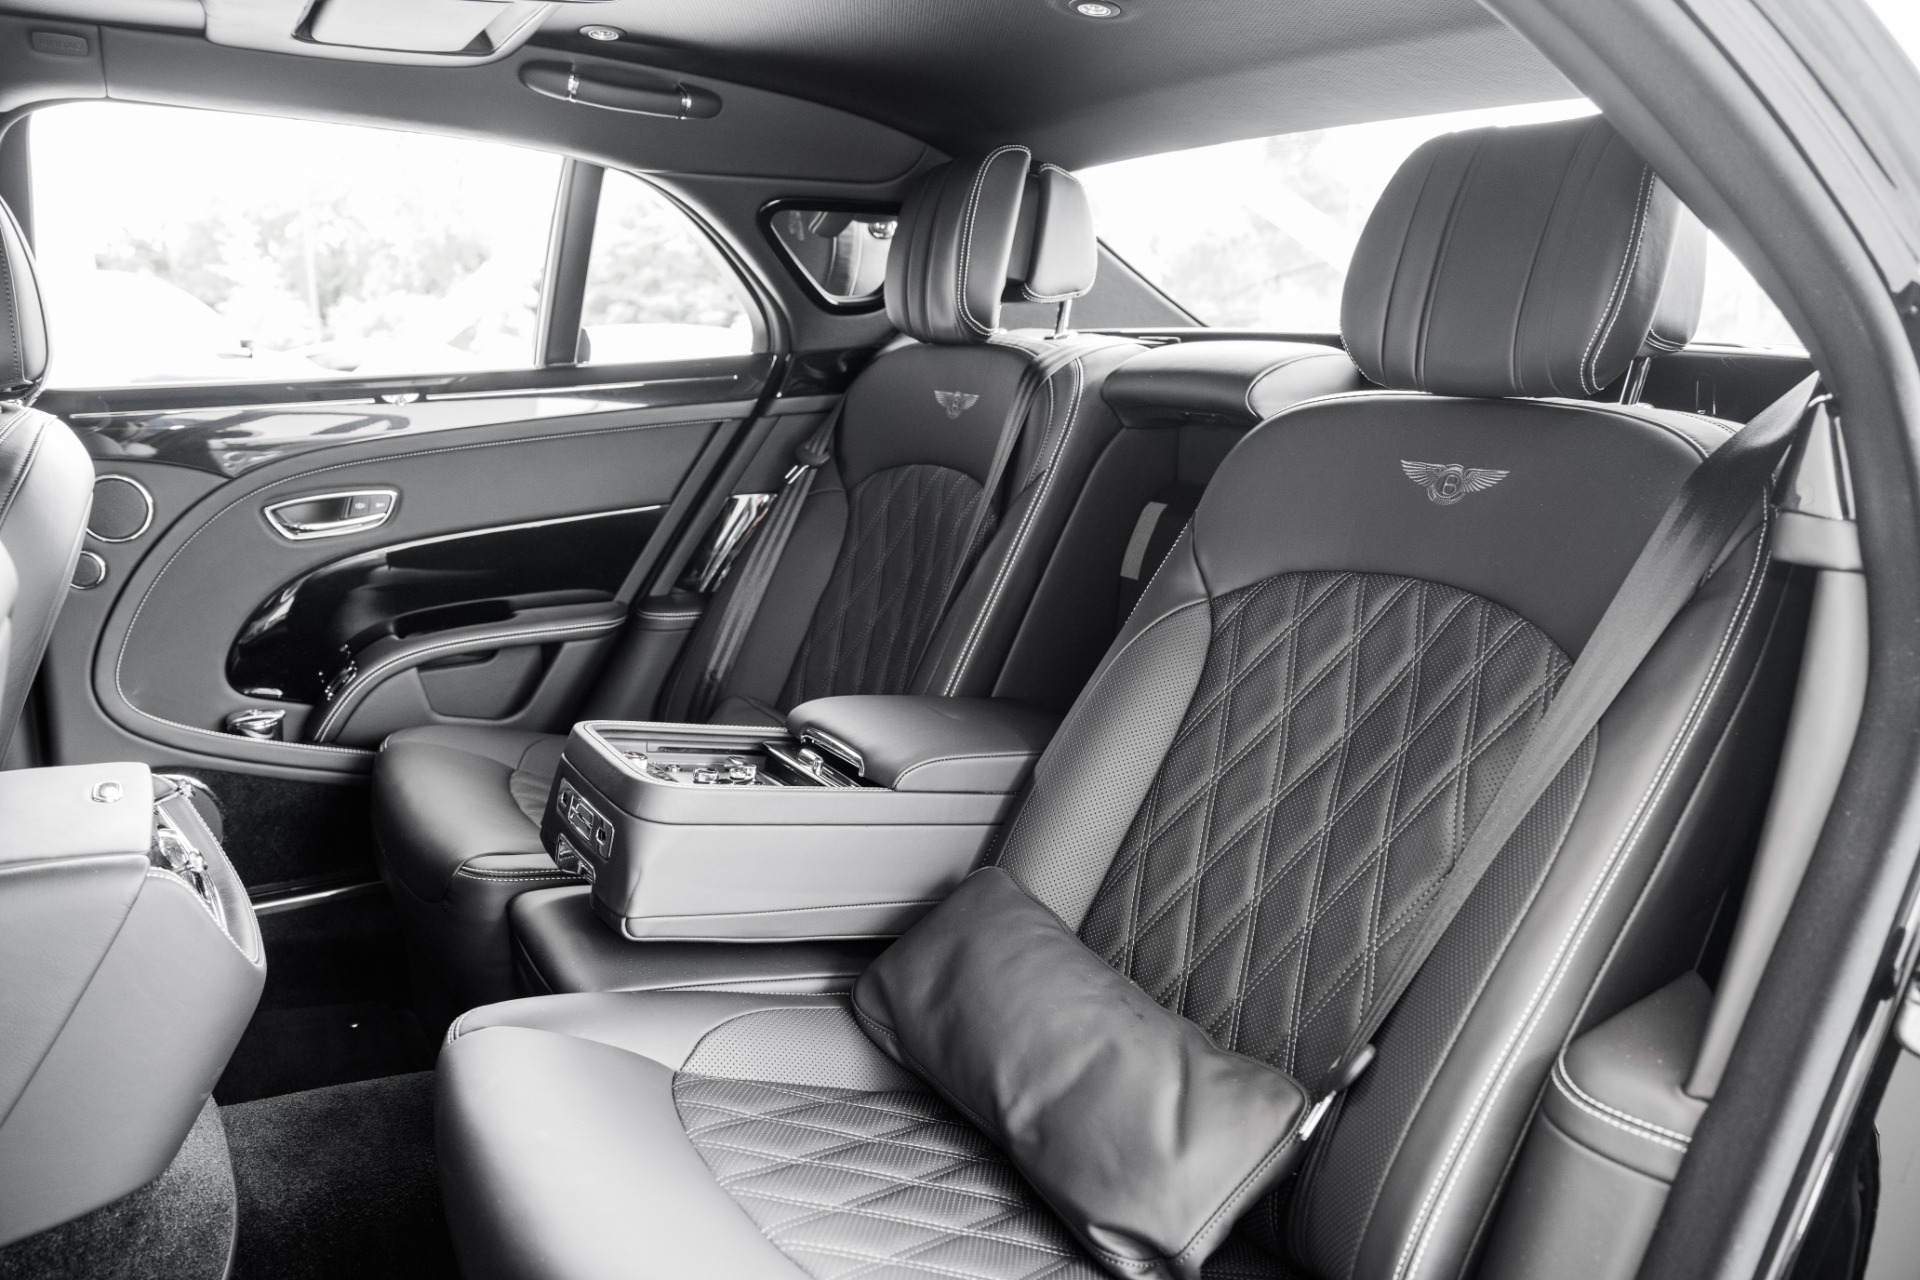 2019 Bentley Mulsanne Specs, Price, MPG & Reviews | Cars.com